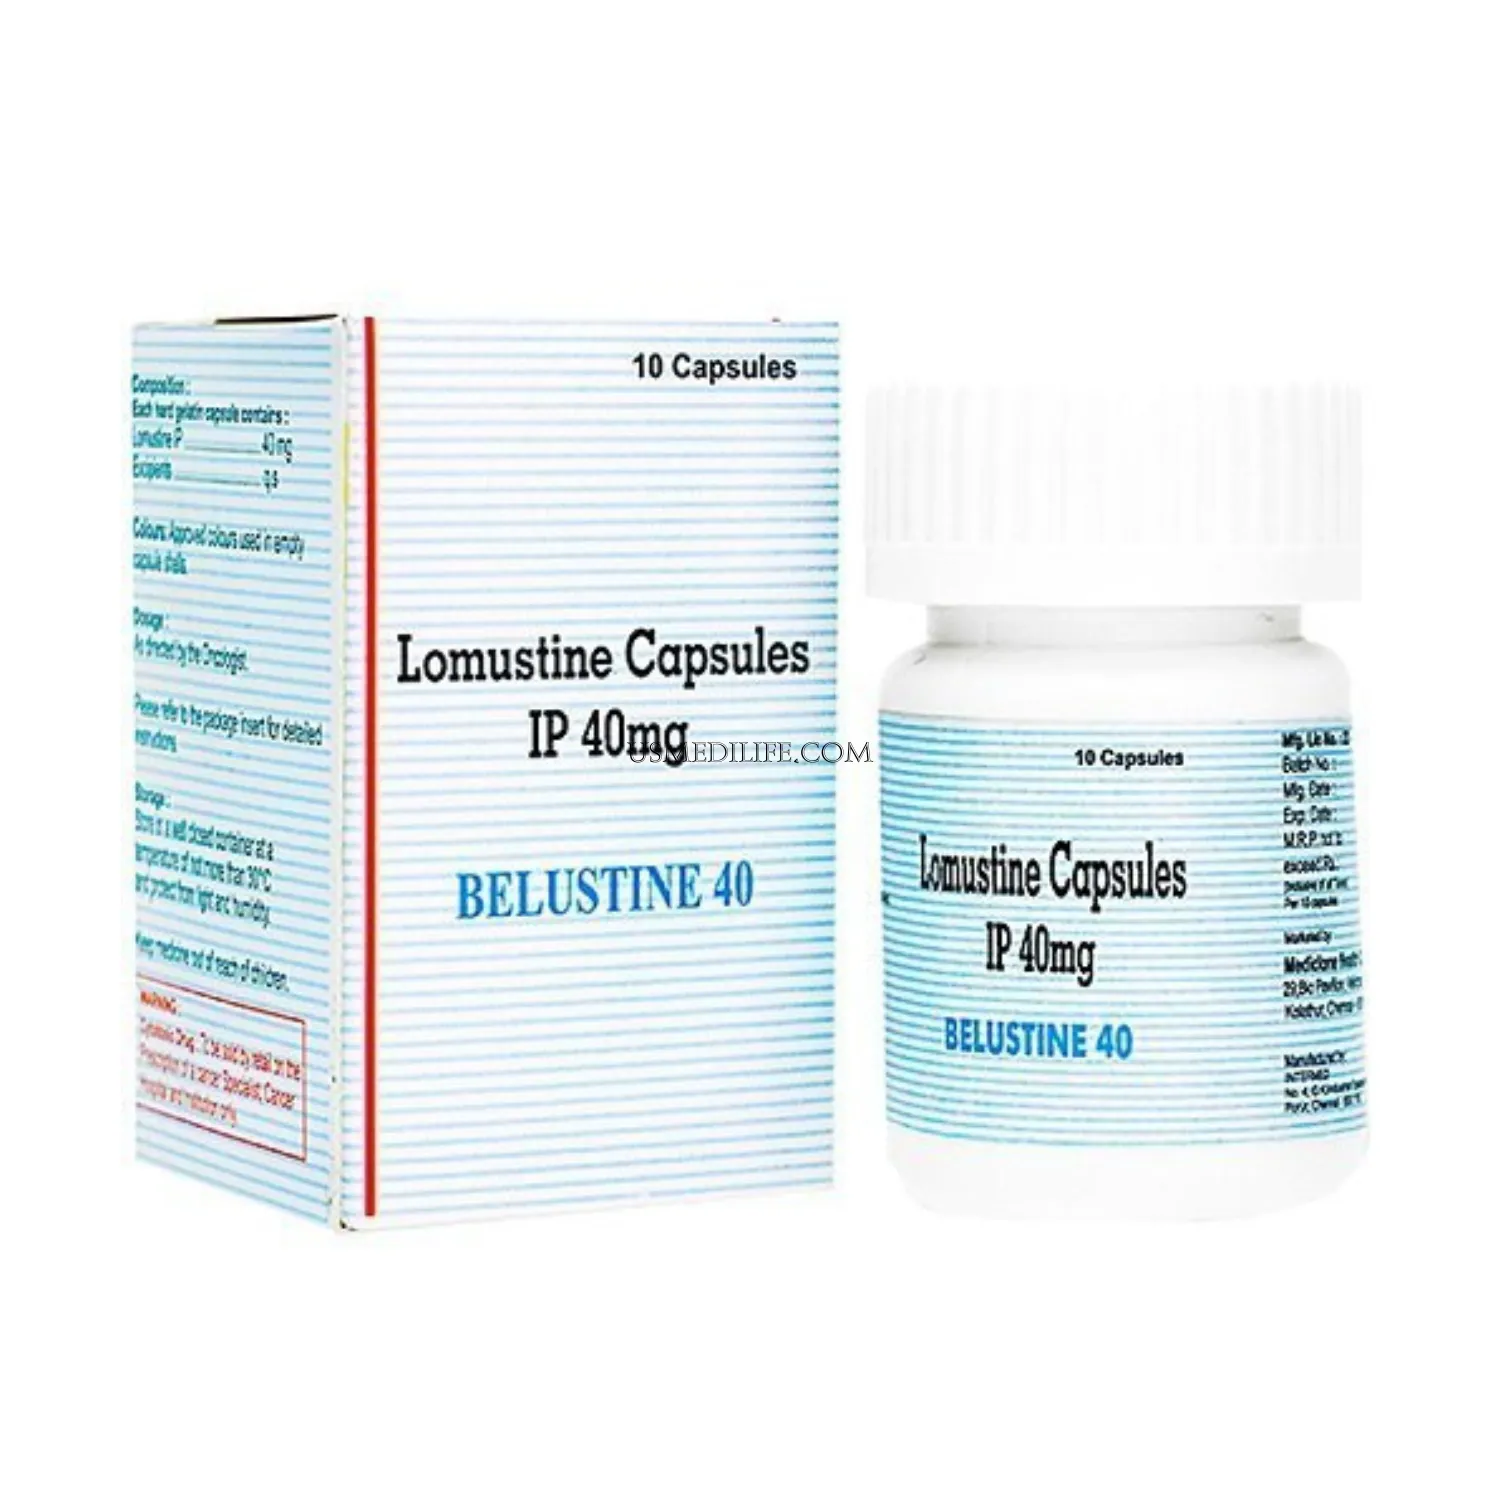 belustine-40-mg                    